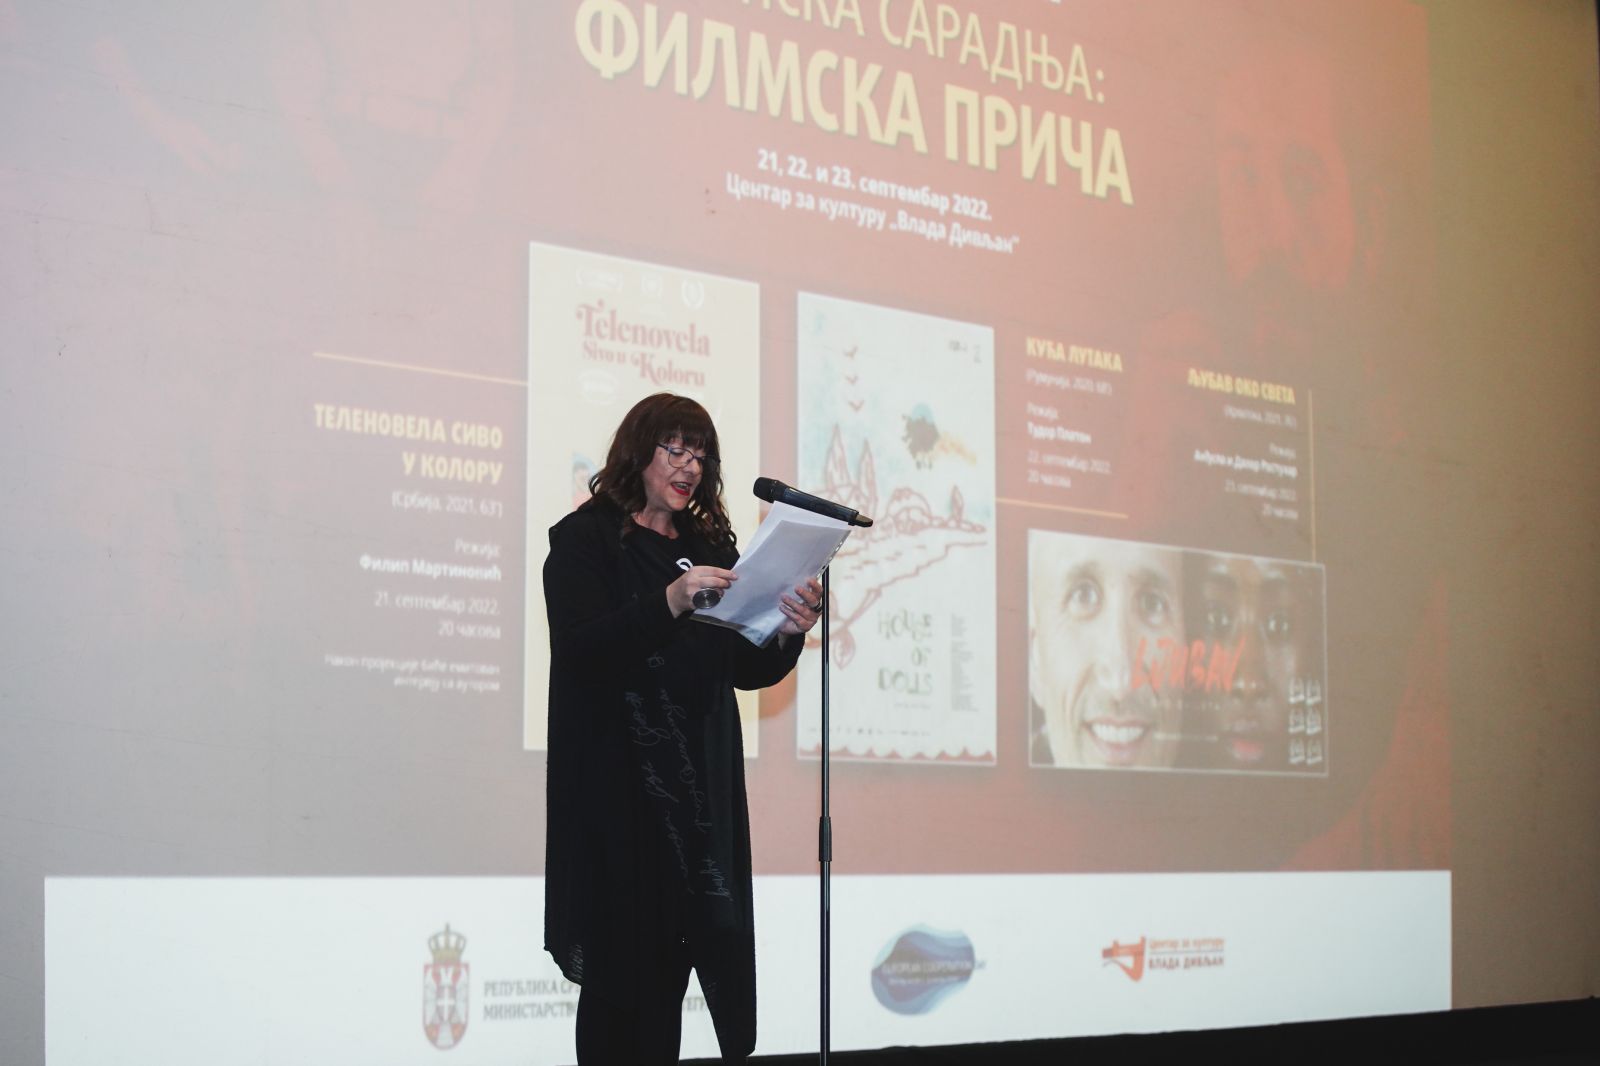 Otvoren sedmi festival dokumentarnog filma „Evropska saradnja: filmska priča“